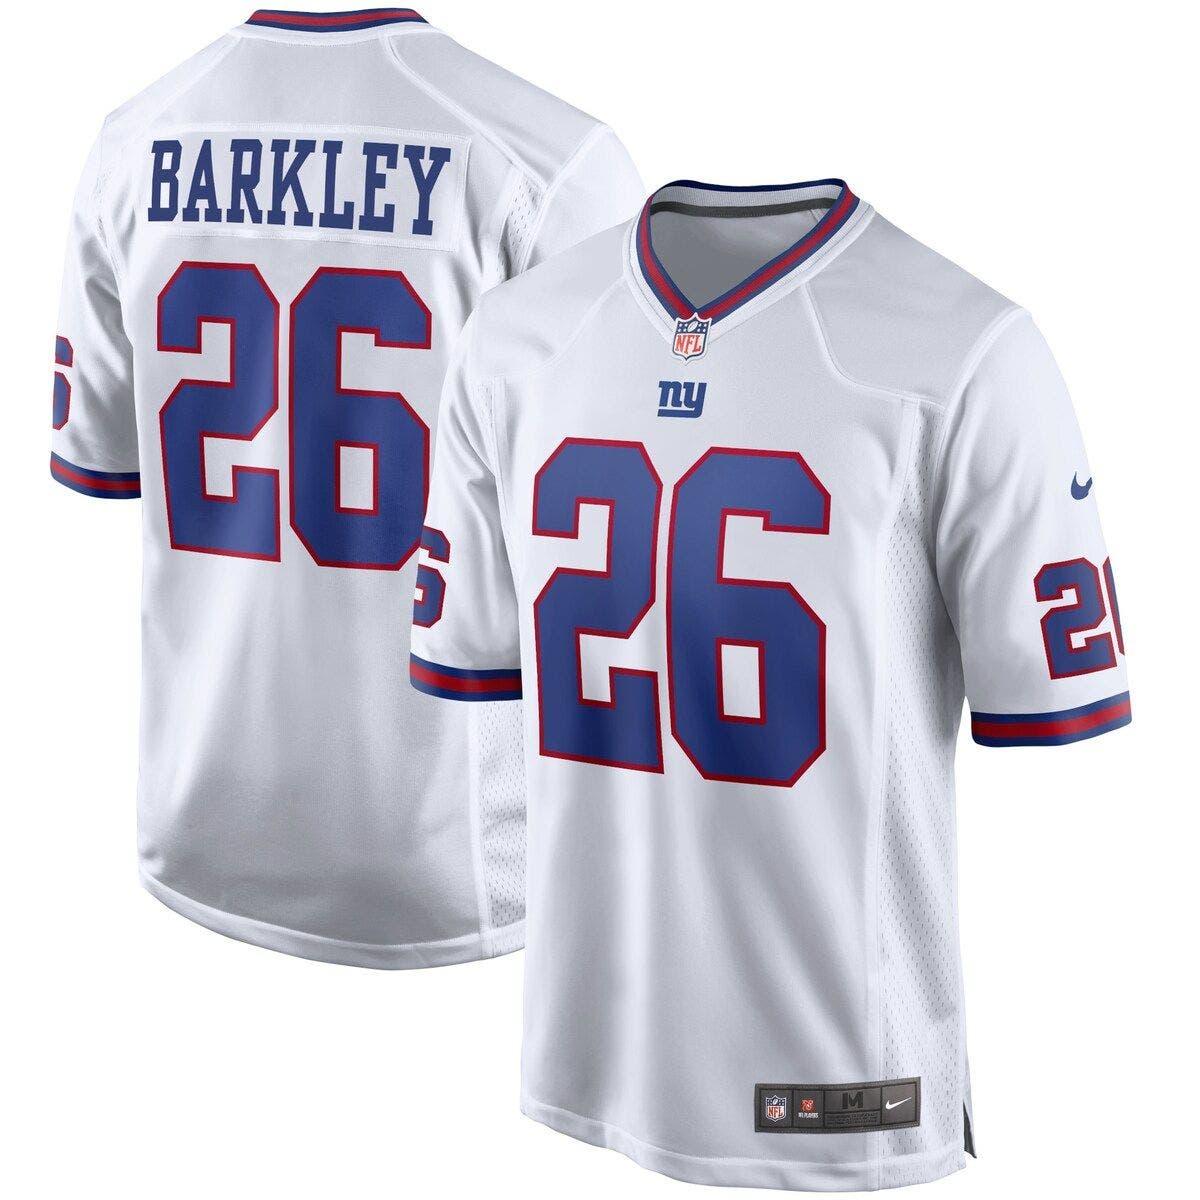 Nike Women's New York Giants Saquon Barkley Game Jersey - Macy's